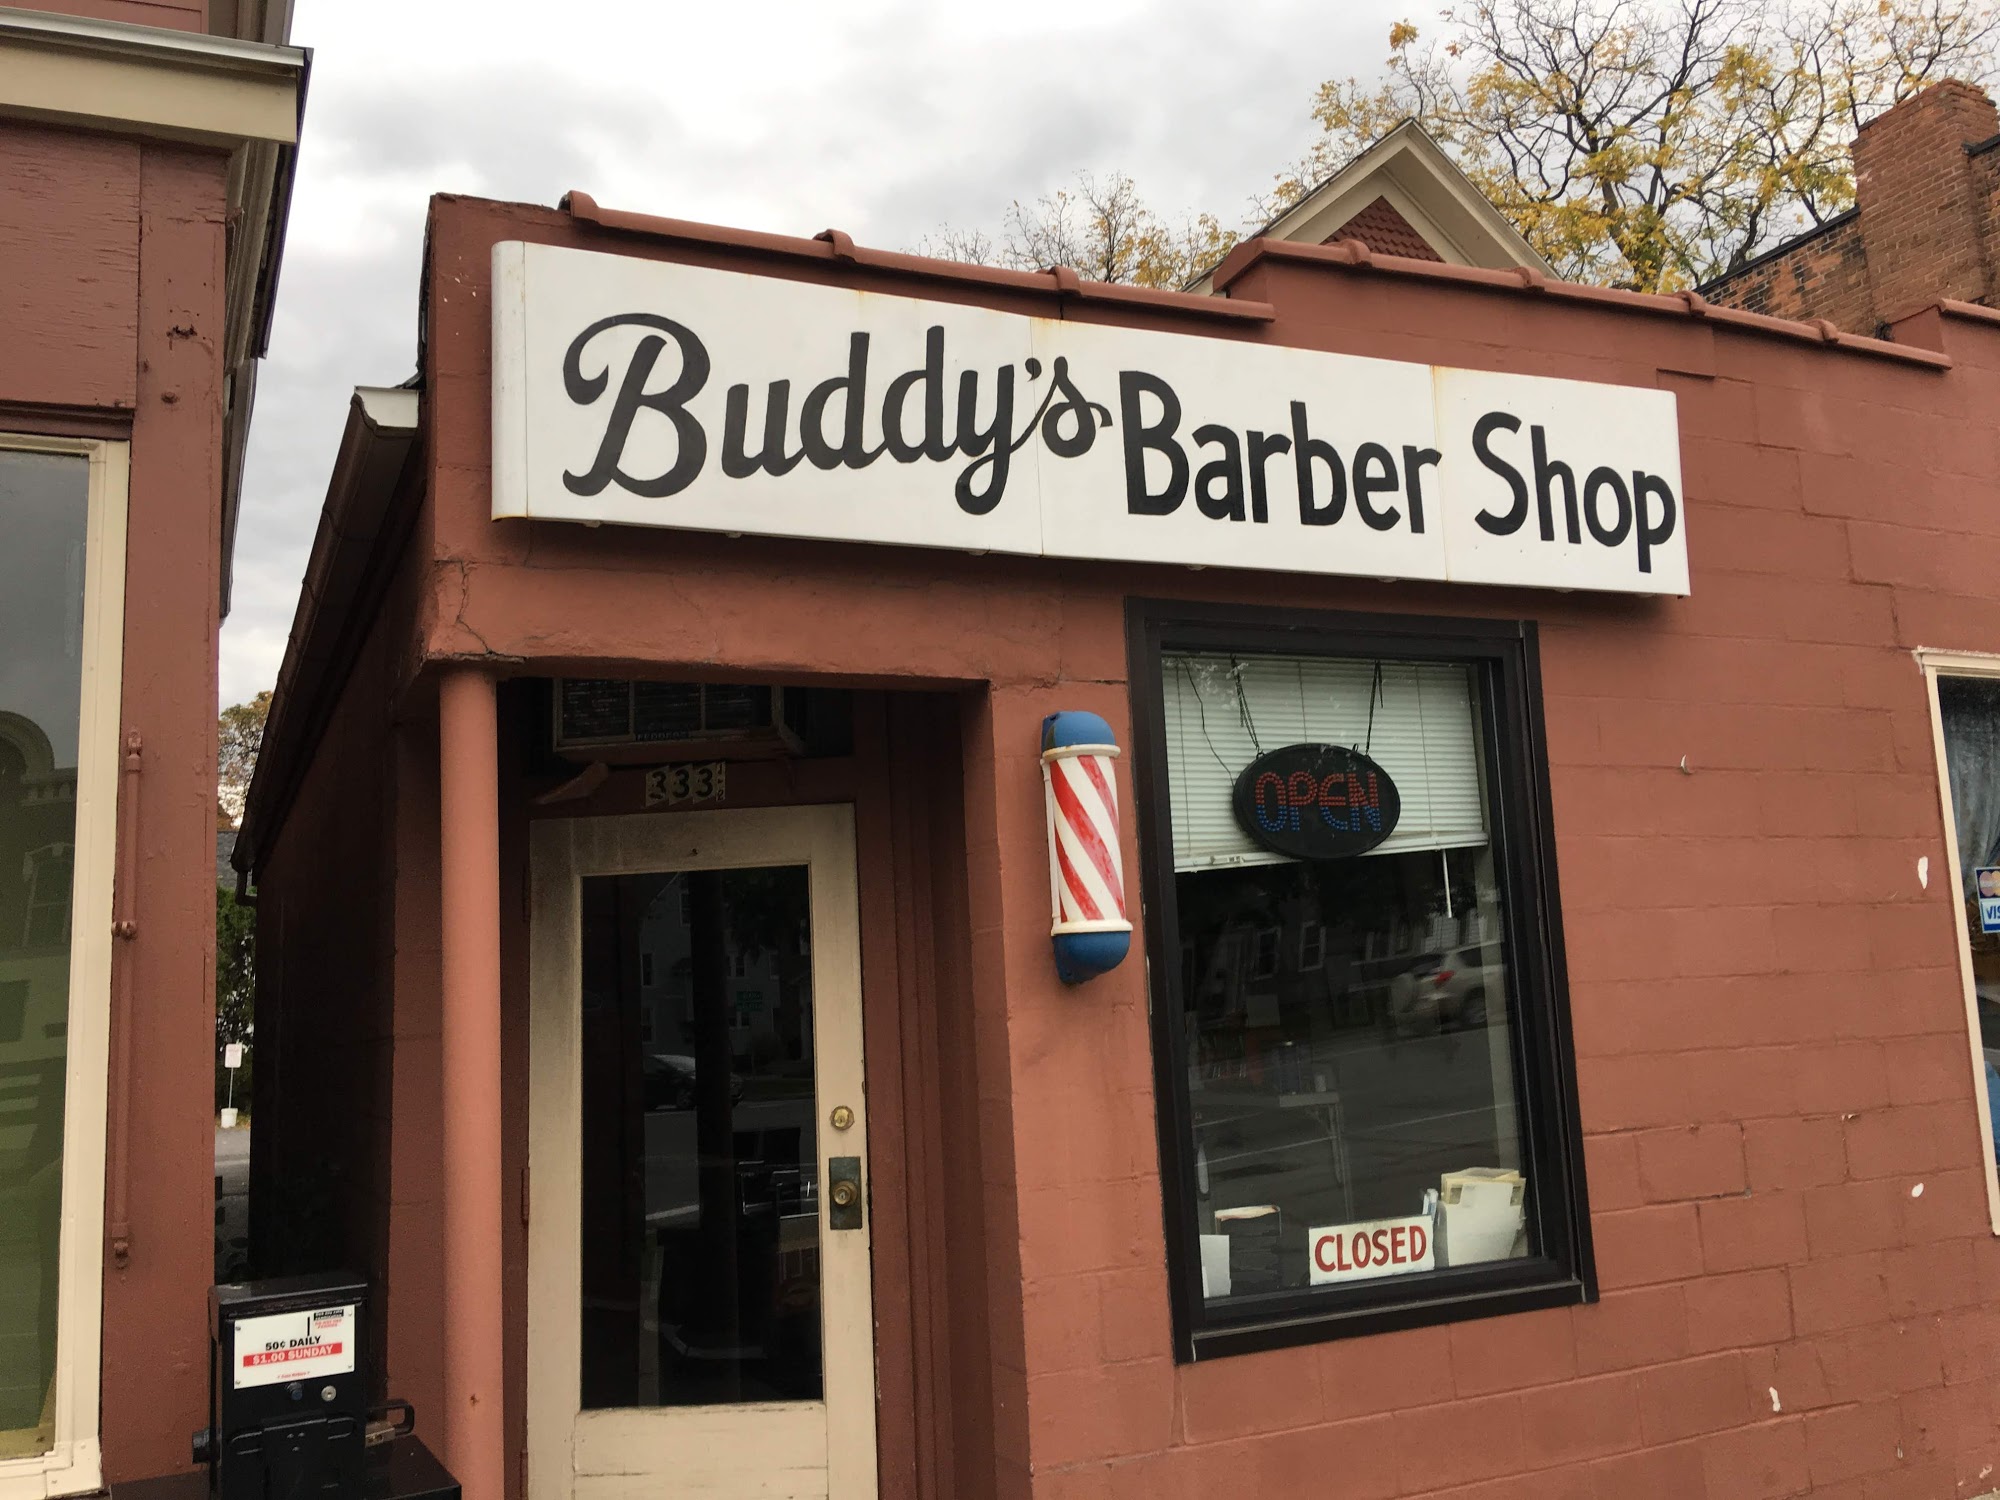 Buddie's Barber Shop